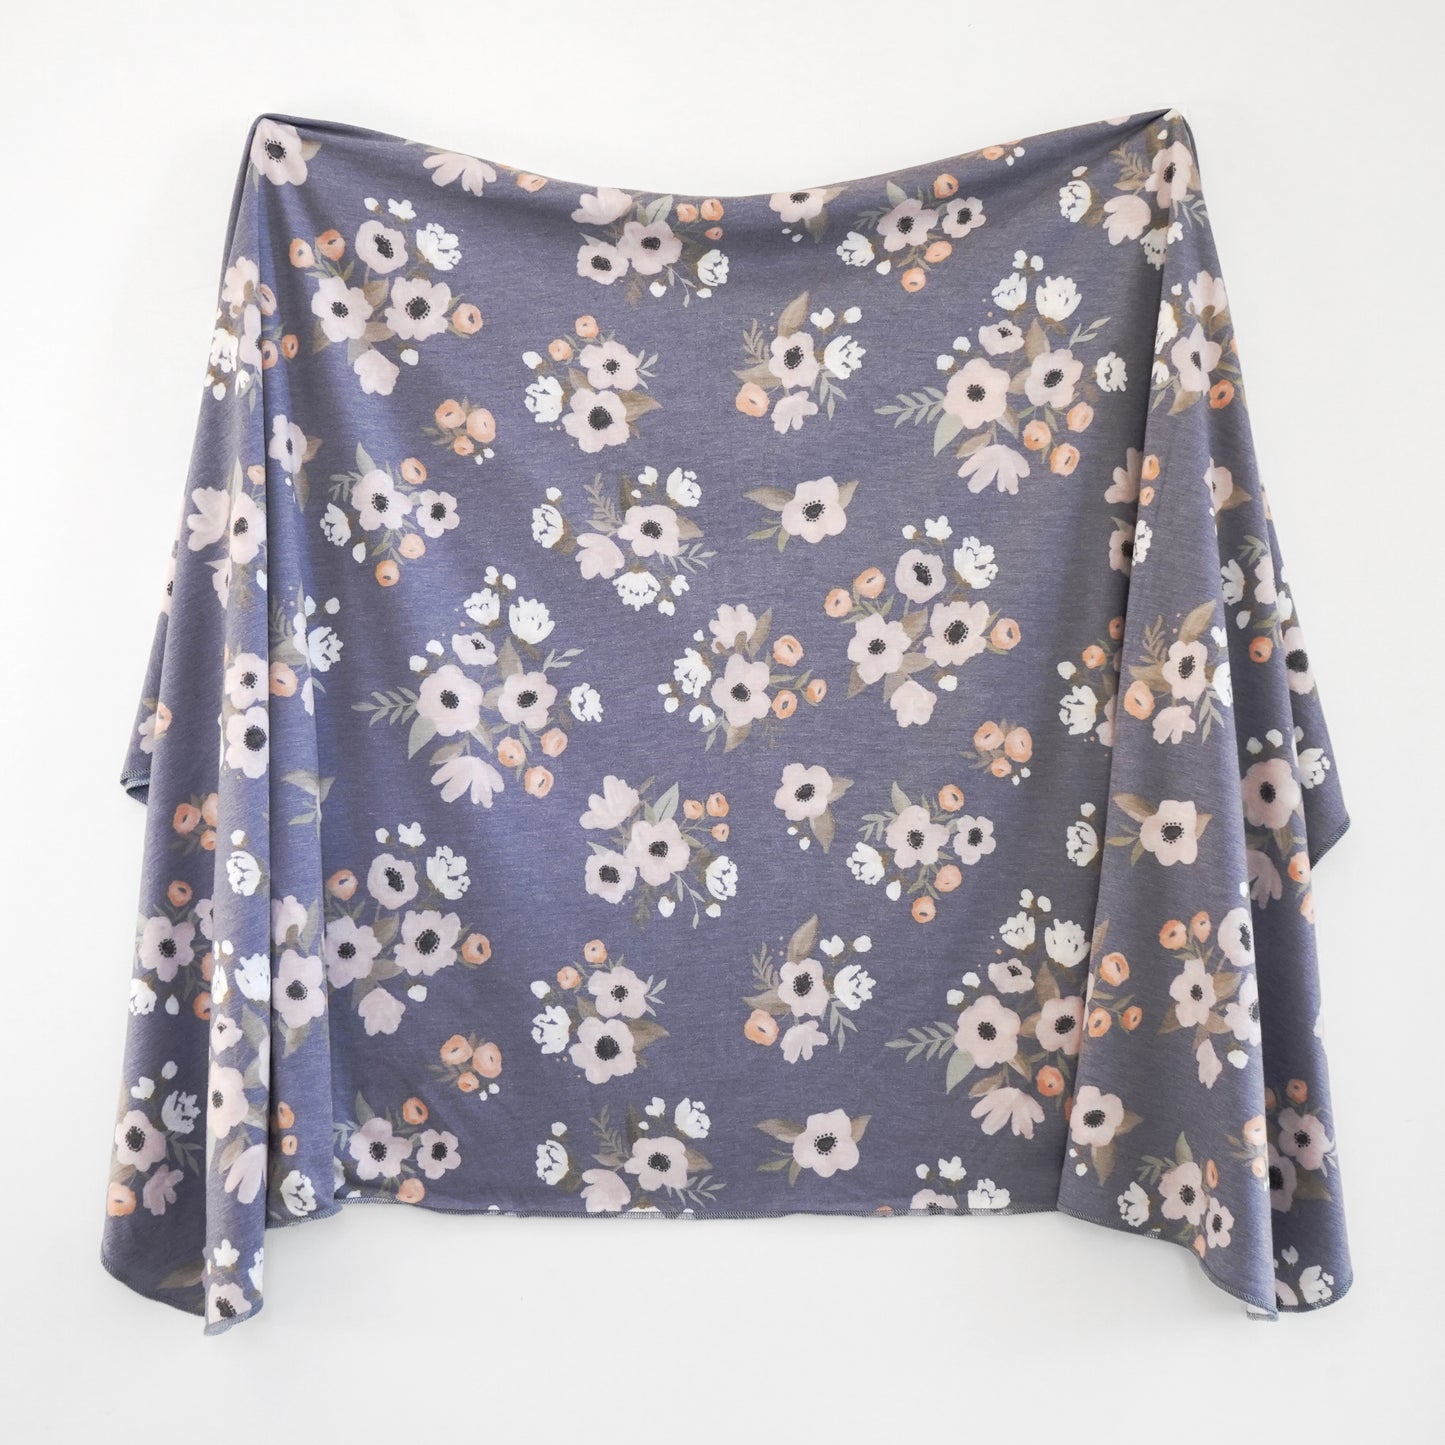 Extra Soft Stretchy Knit Swaddle Blanket: Midnight Garden